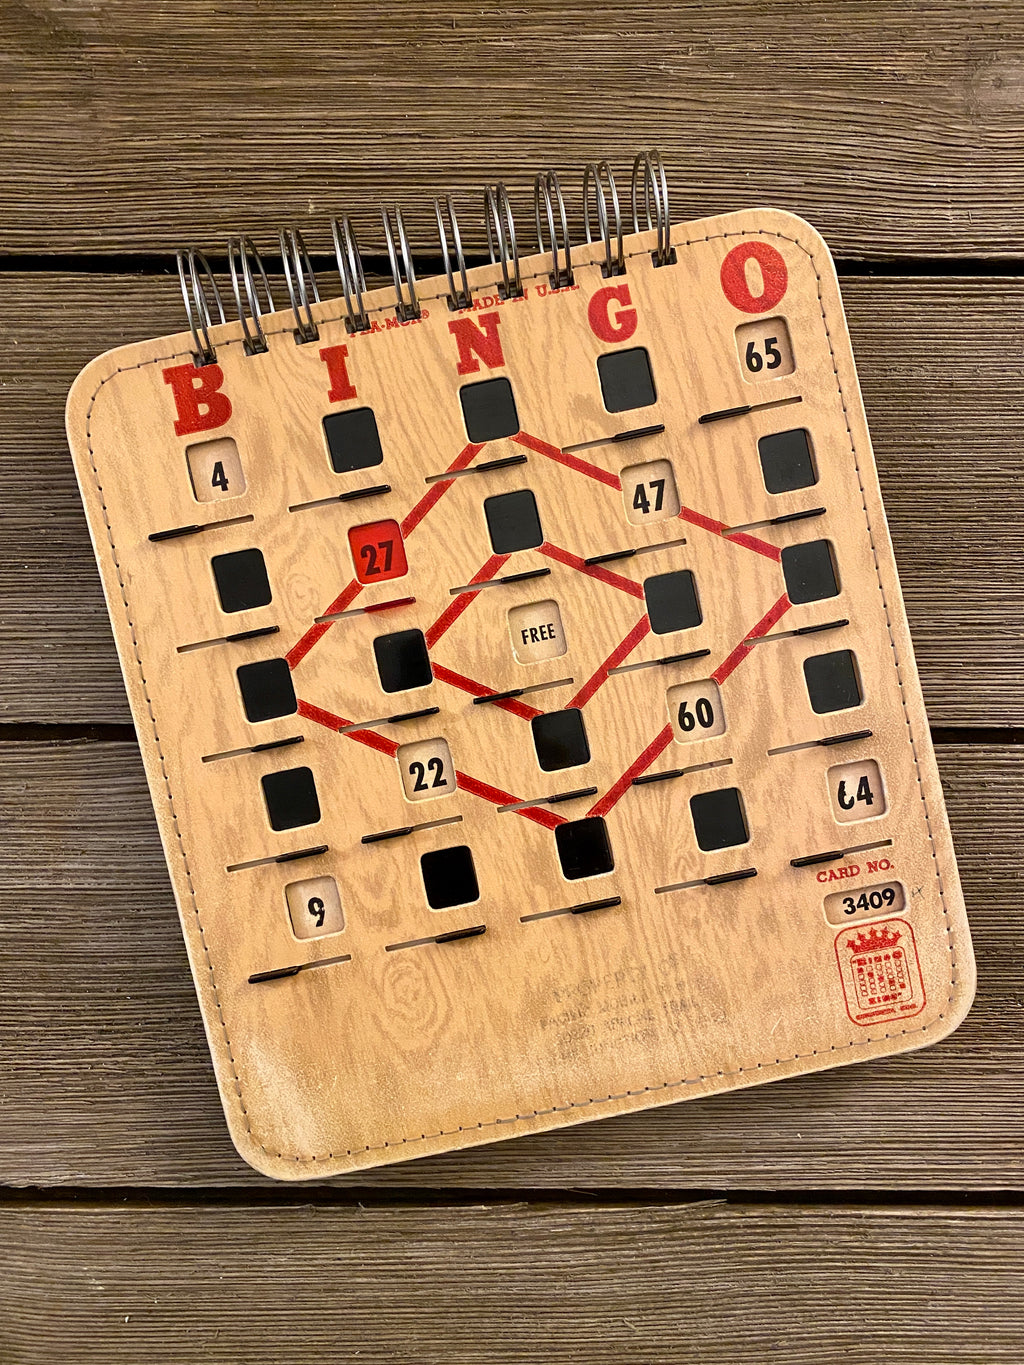 Bingo Notebook - (card #3409)